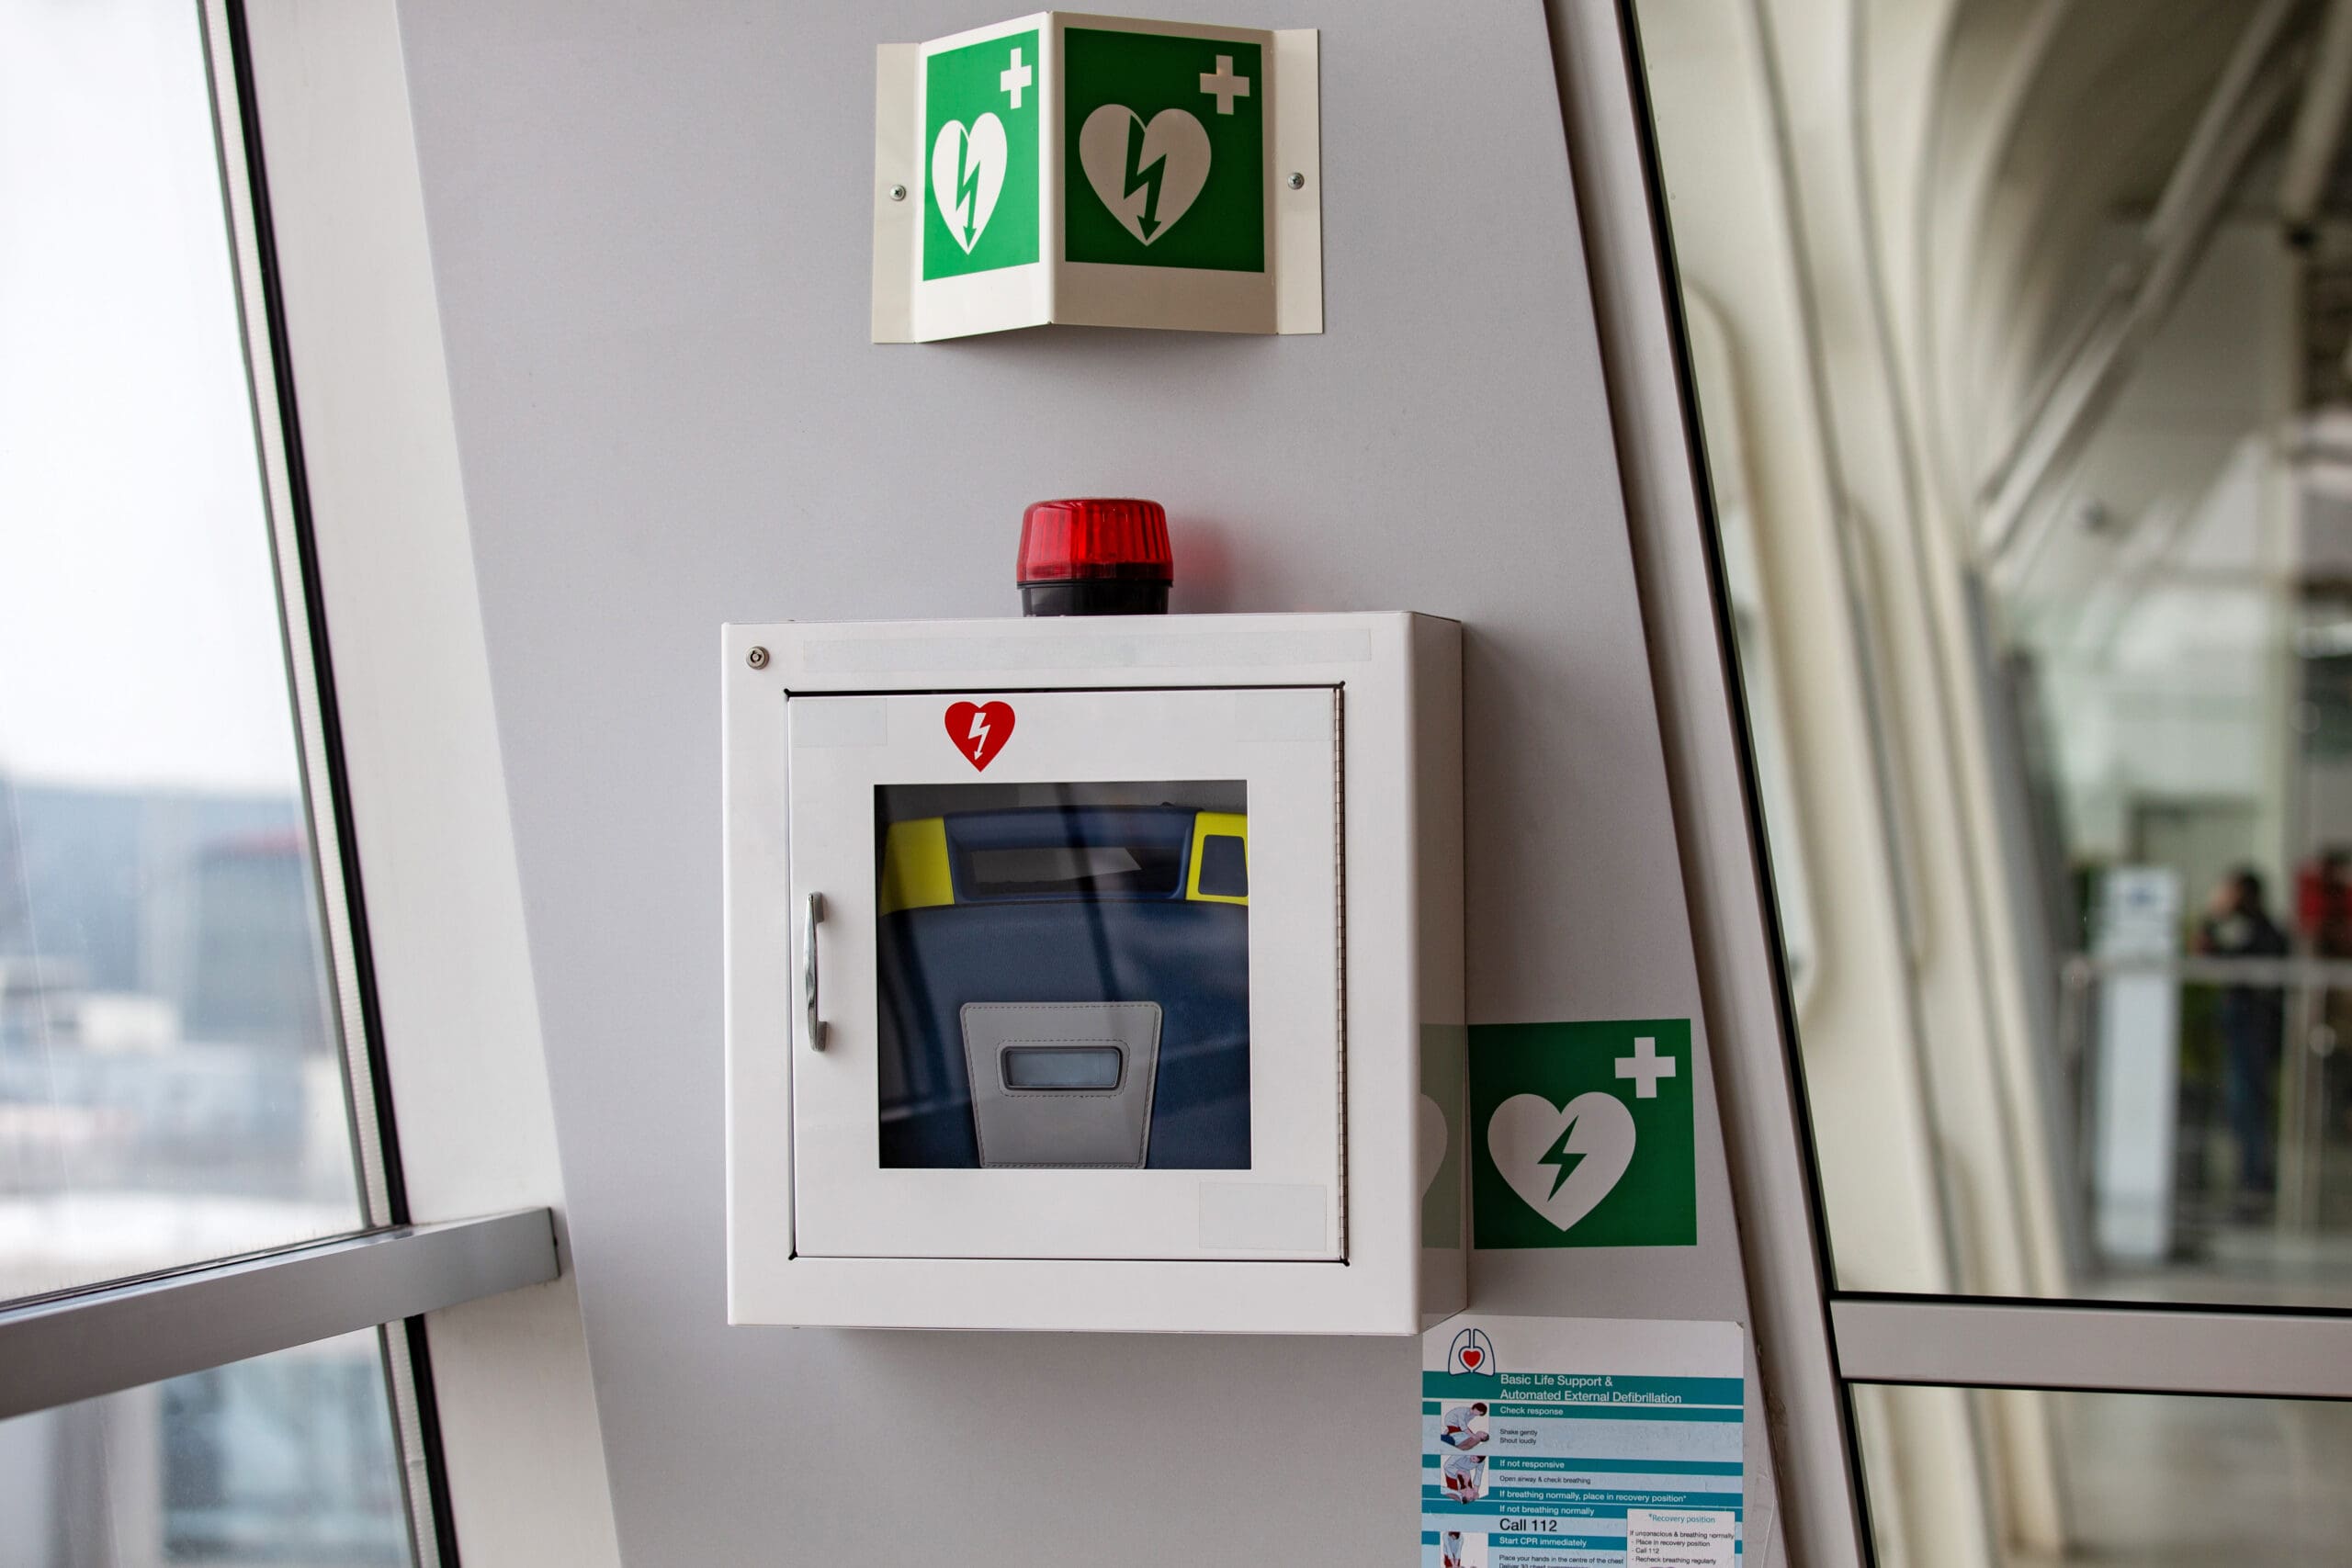 Reddingsmiddelensignalering bordje boven AED apparaat